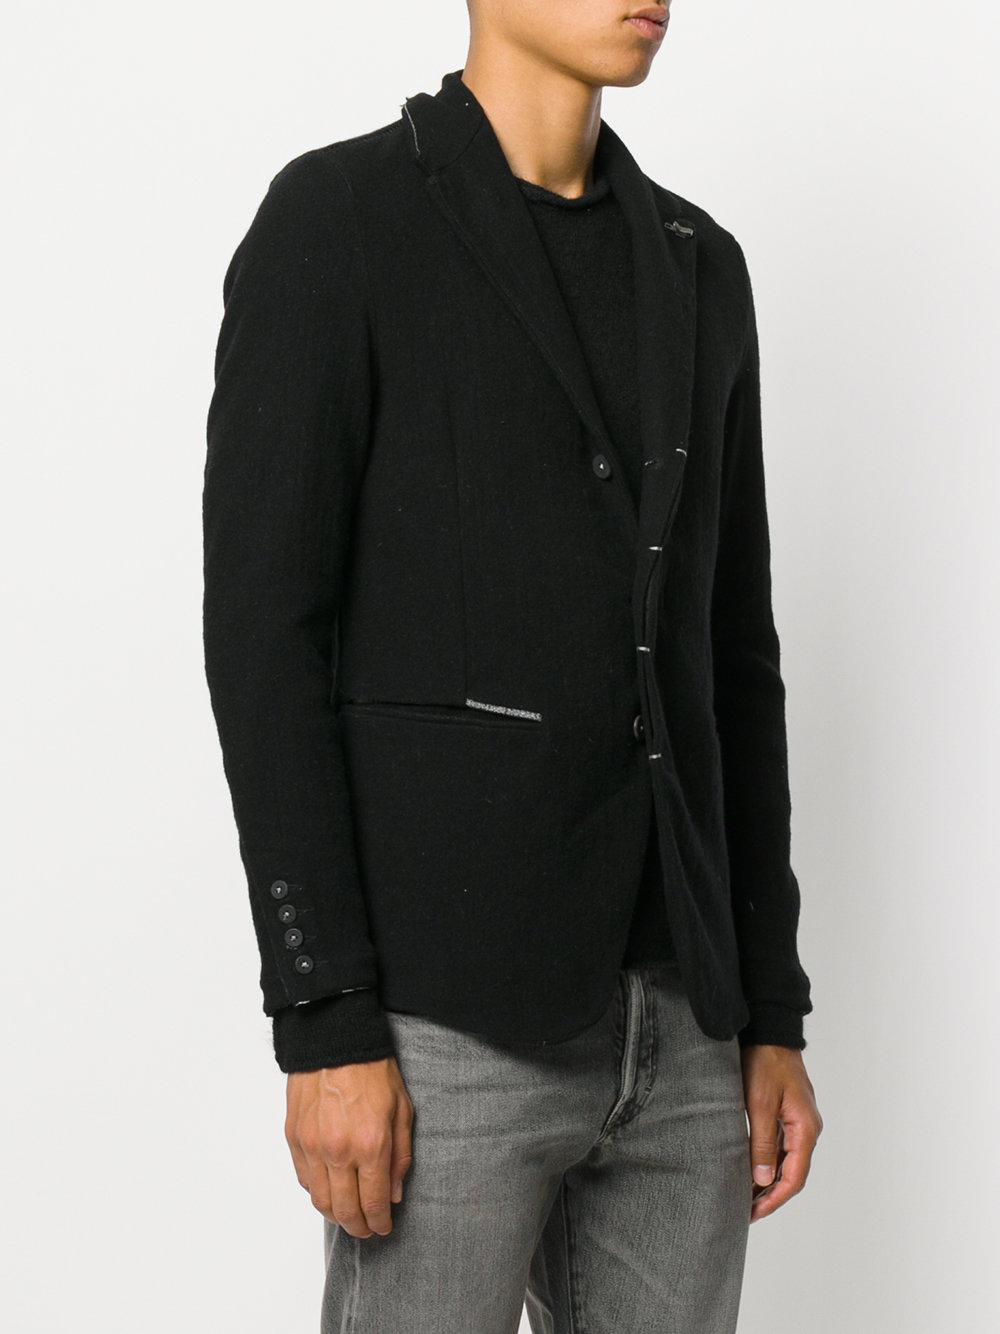 Transit Wool Deconstructed Blazer in Black for Men - Lyst